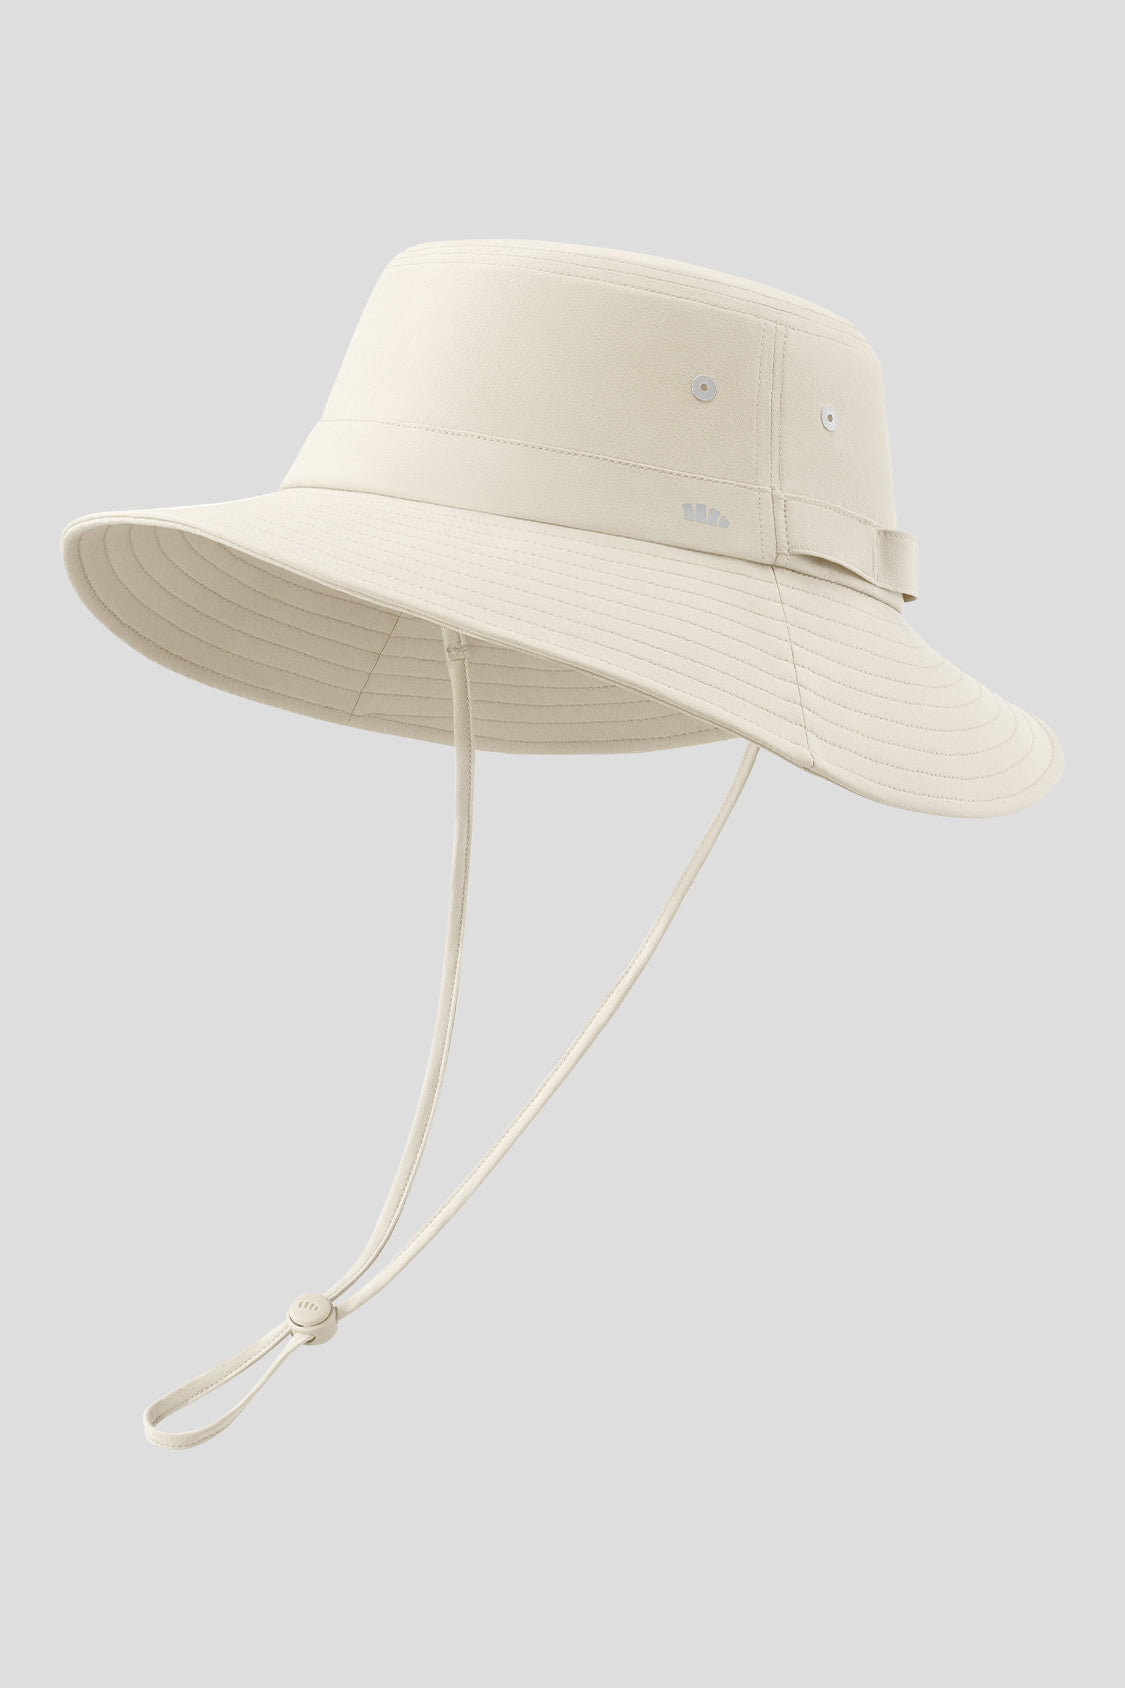 Cover - Men's Full Coverage Sun Protection Fishing Hat UPF50+